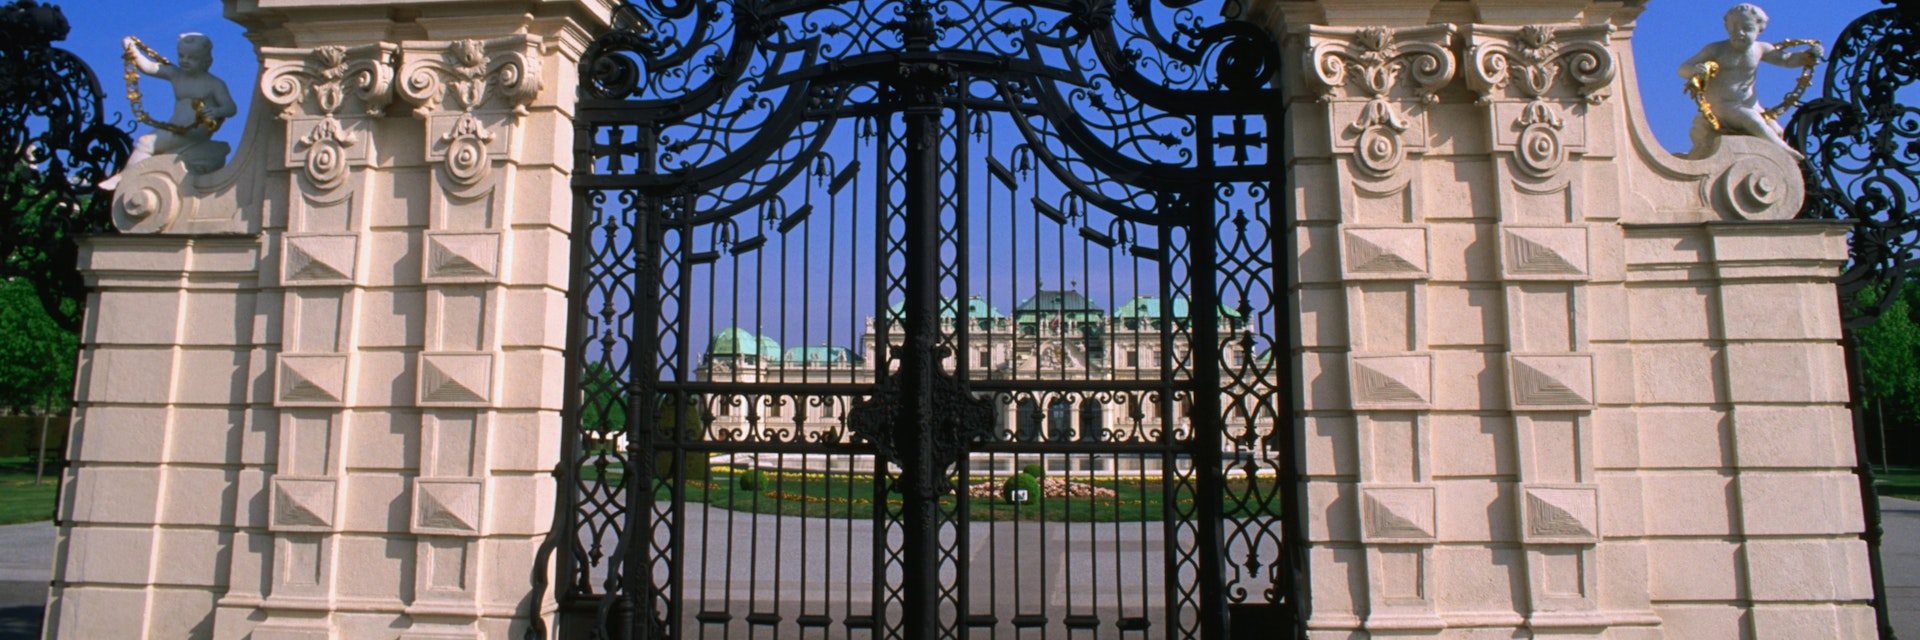 Gate into Schloss Belvedere gardens, Landstrasse.